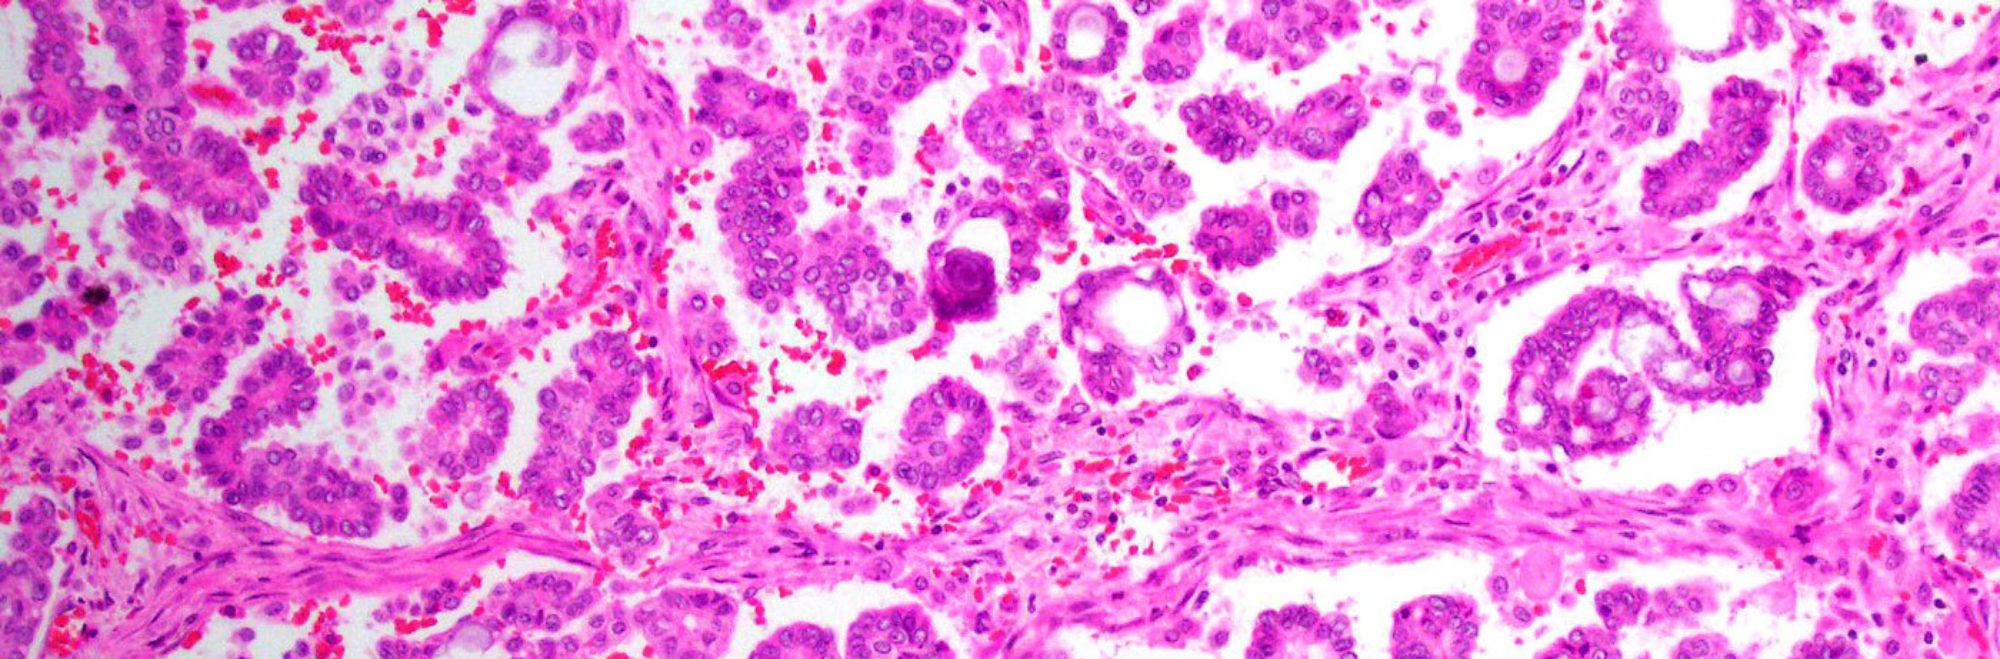 Low-Grade Serous Carcinoma Epithelial Tumor